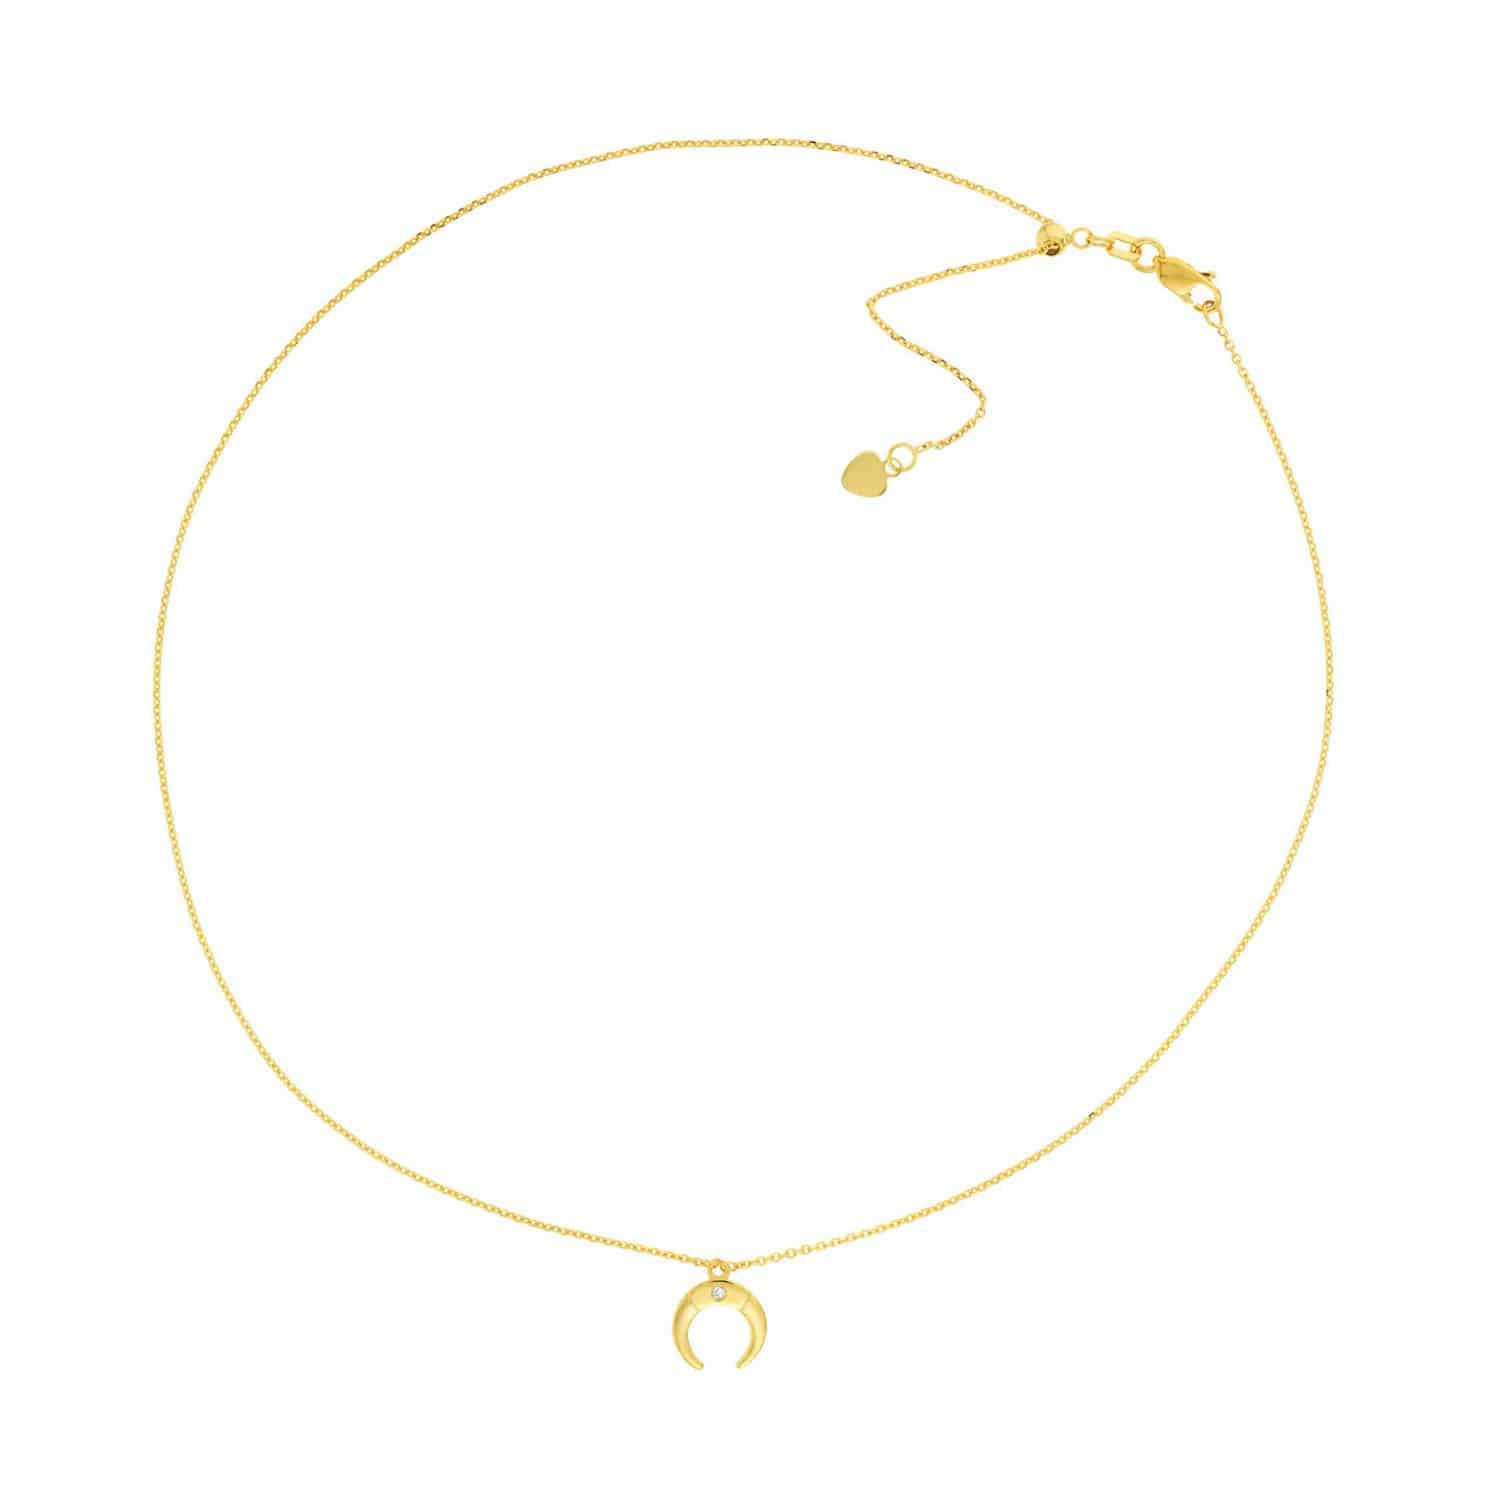 Natural Diamond 14K Yellow Gold Drop Horn Pendant Choker Necklace 14"-16" Adjust